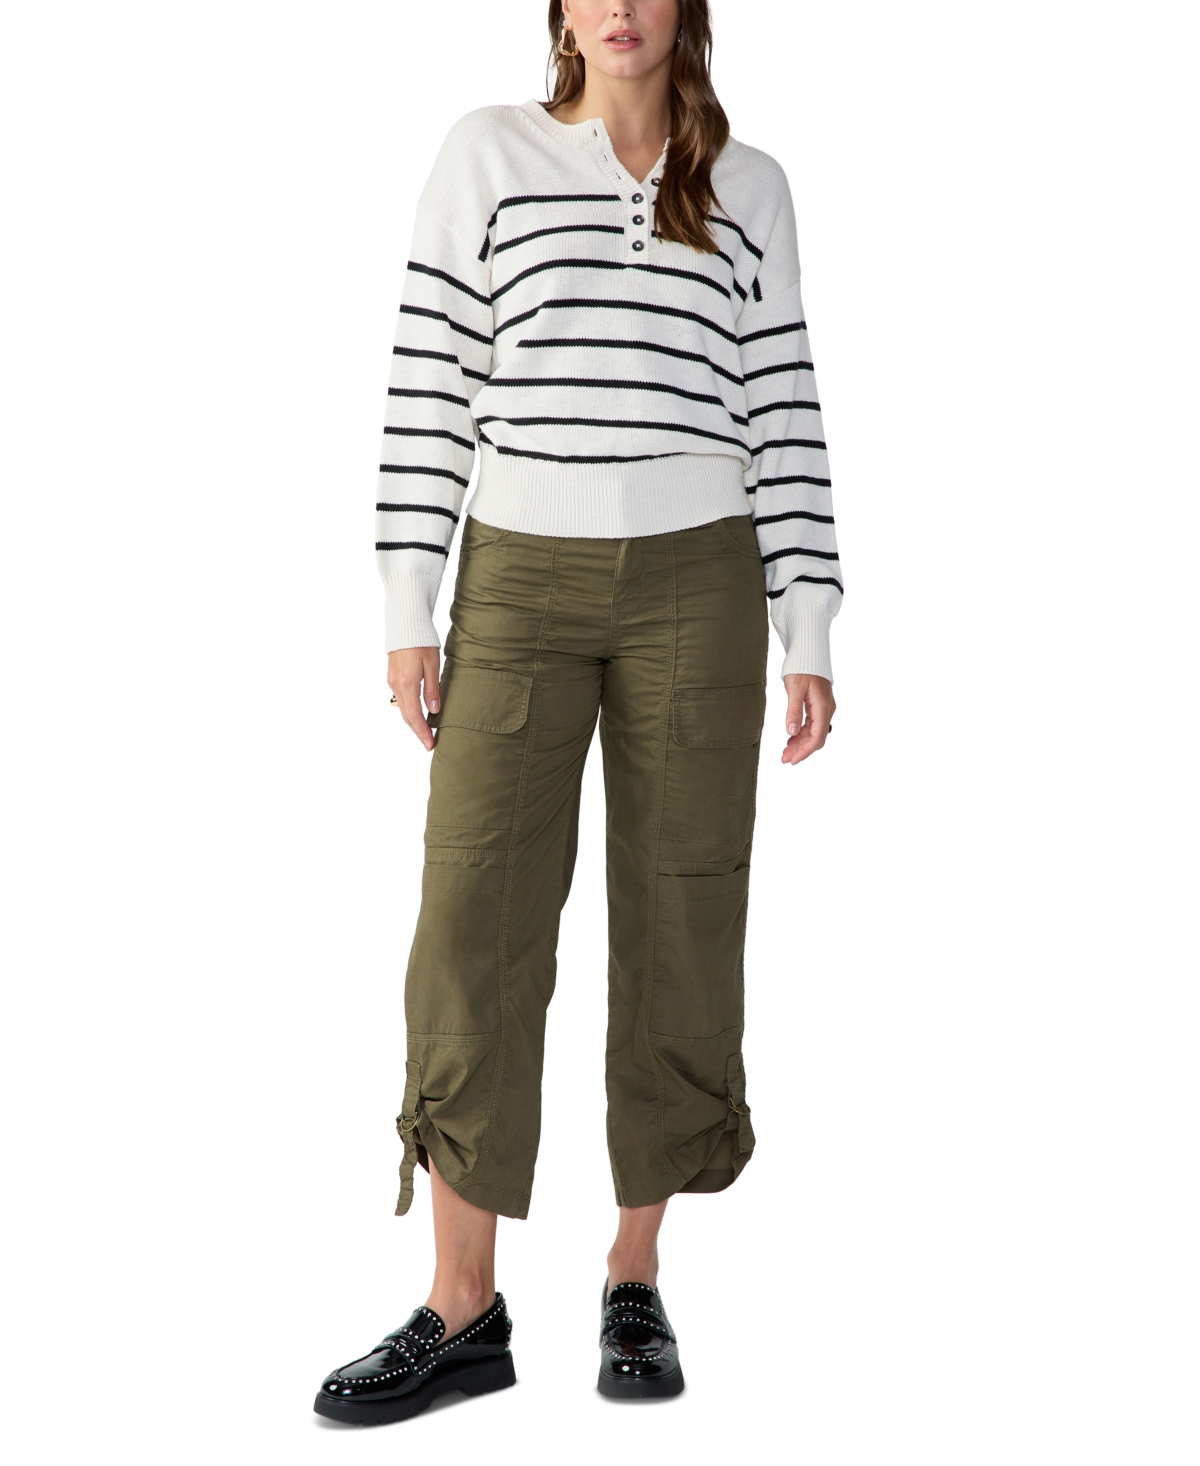 Women's Casual & Chill Striped Cotton Henley Sweater - Black Stripe